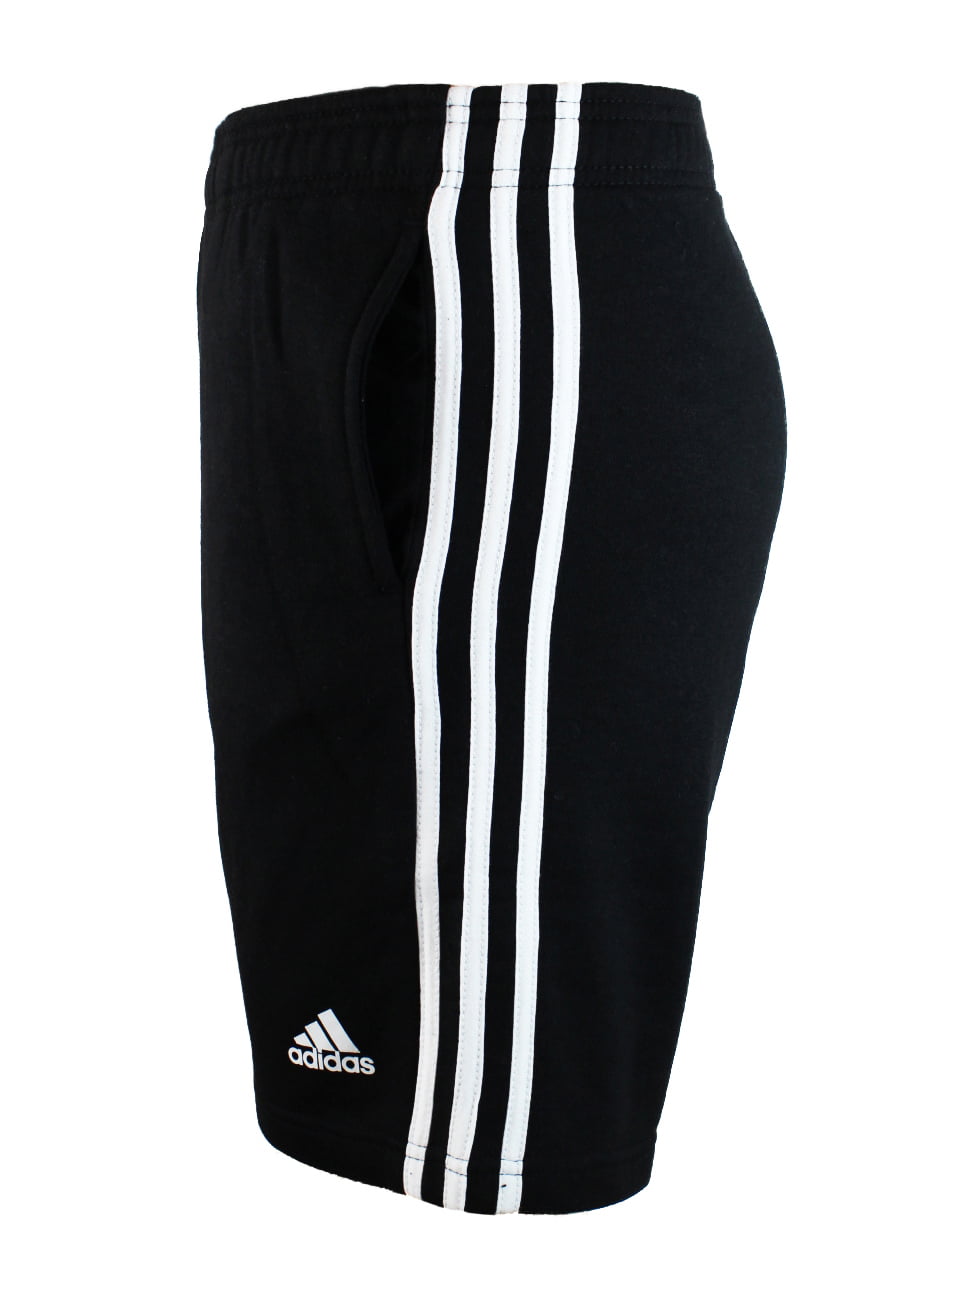 Adidas - Adidas Men's Shorts BK7468 ESS 3S Black White - Walmart.com -  Walmart.com